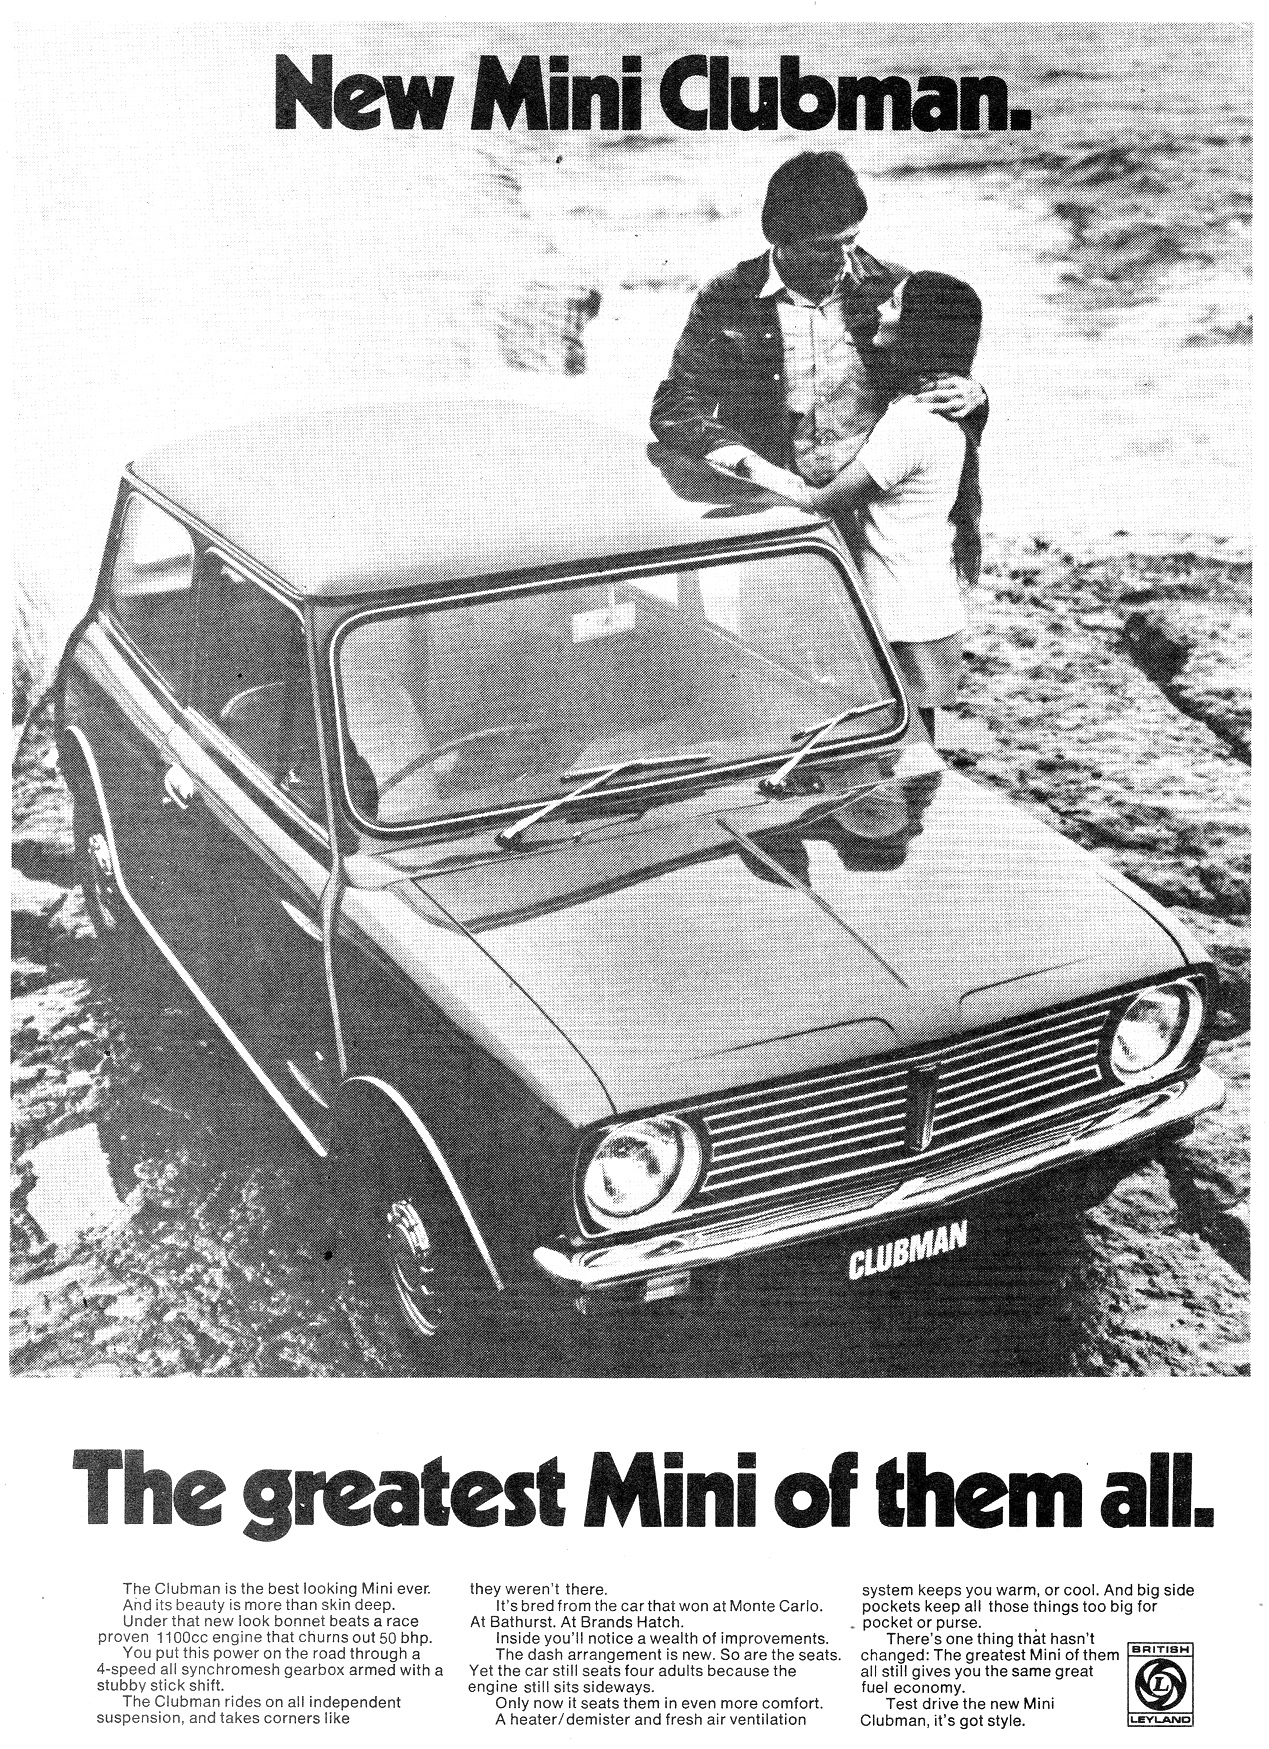 1971 Mini Clubman British Leyland